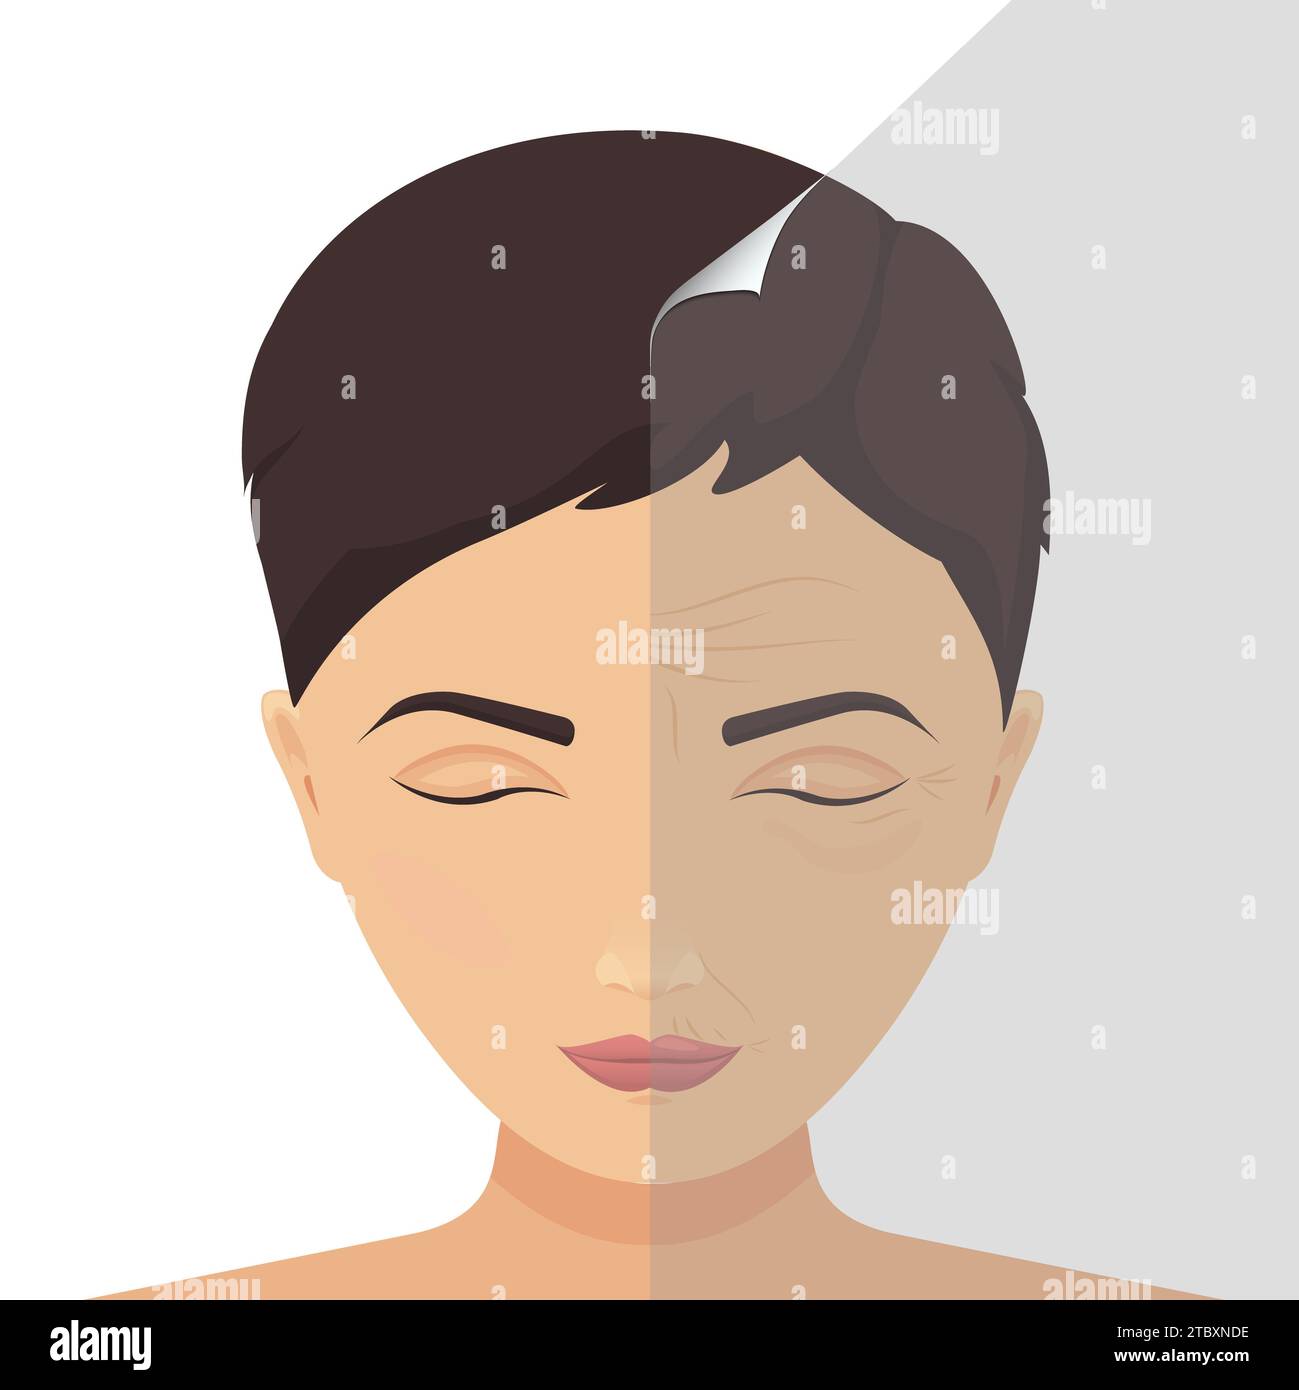 Beauty treatment, conceptual illustration Stock Photo